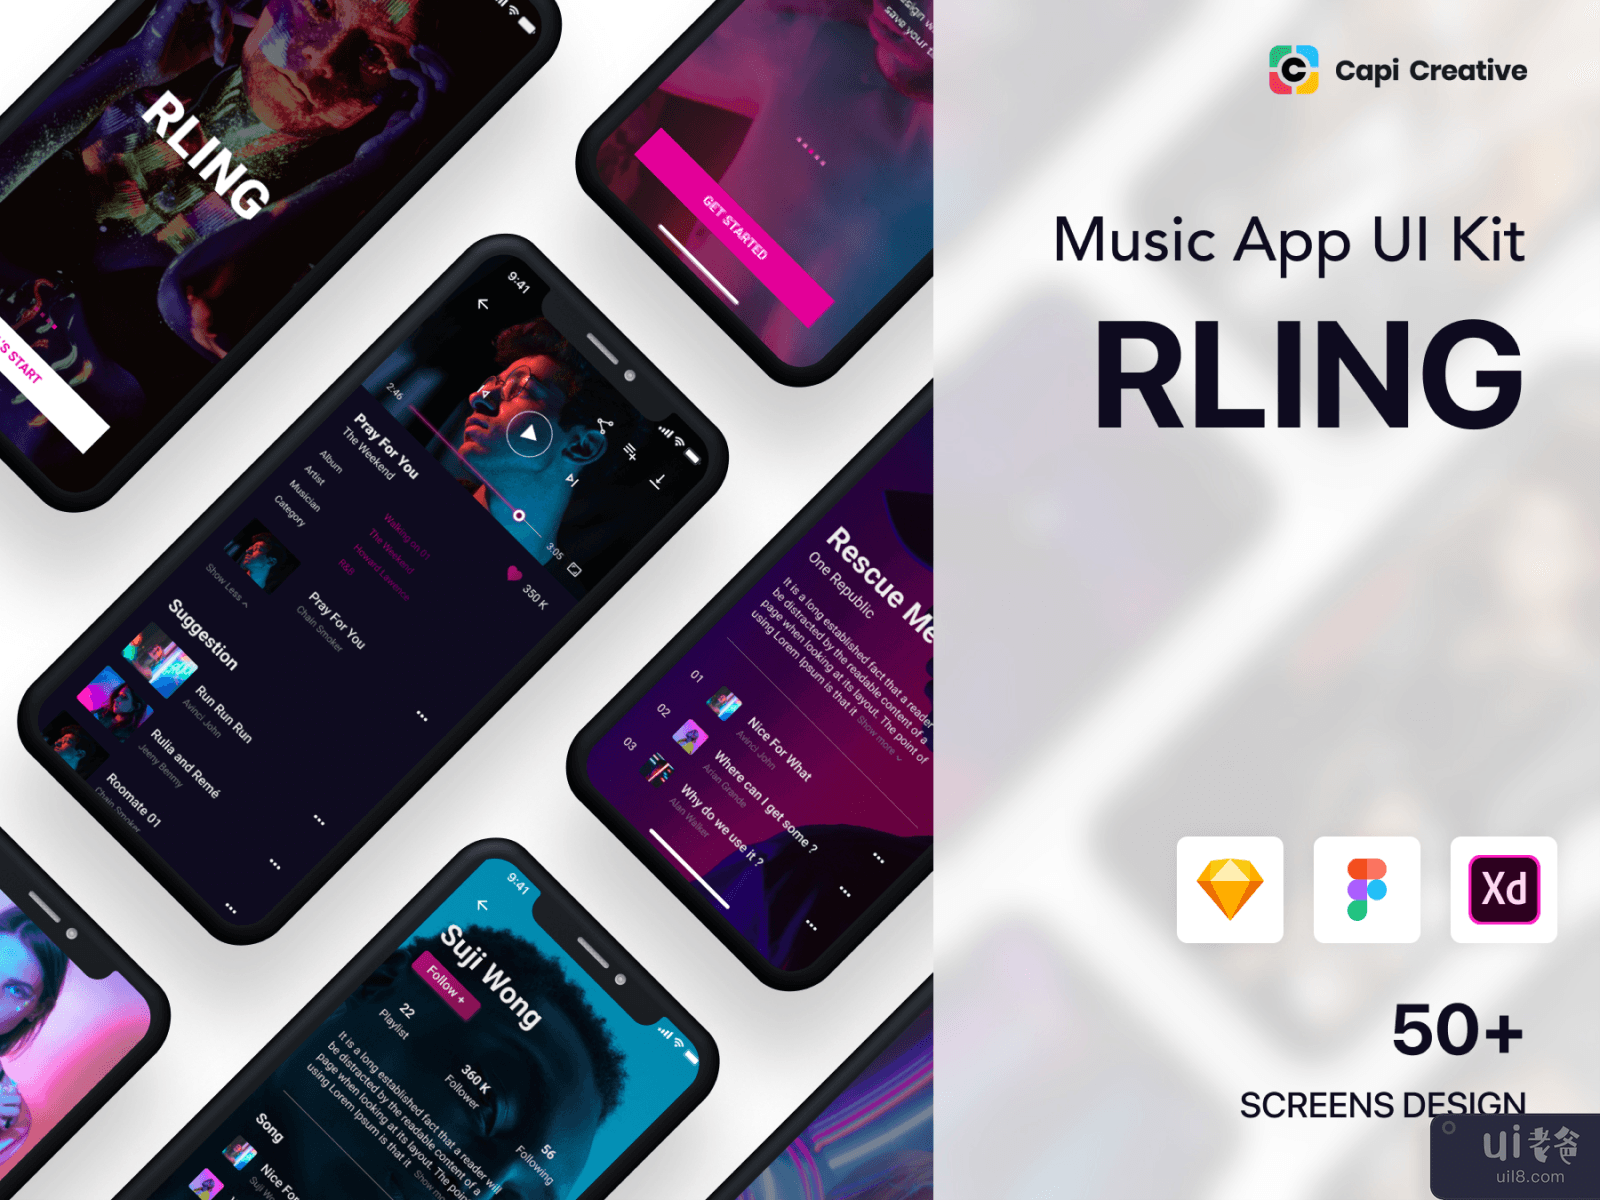 RLing - Music App UI Kit #1